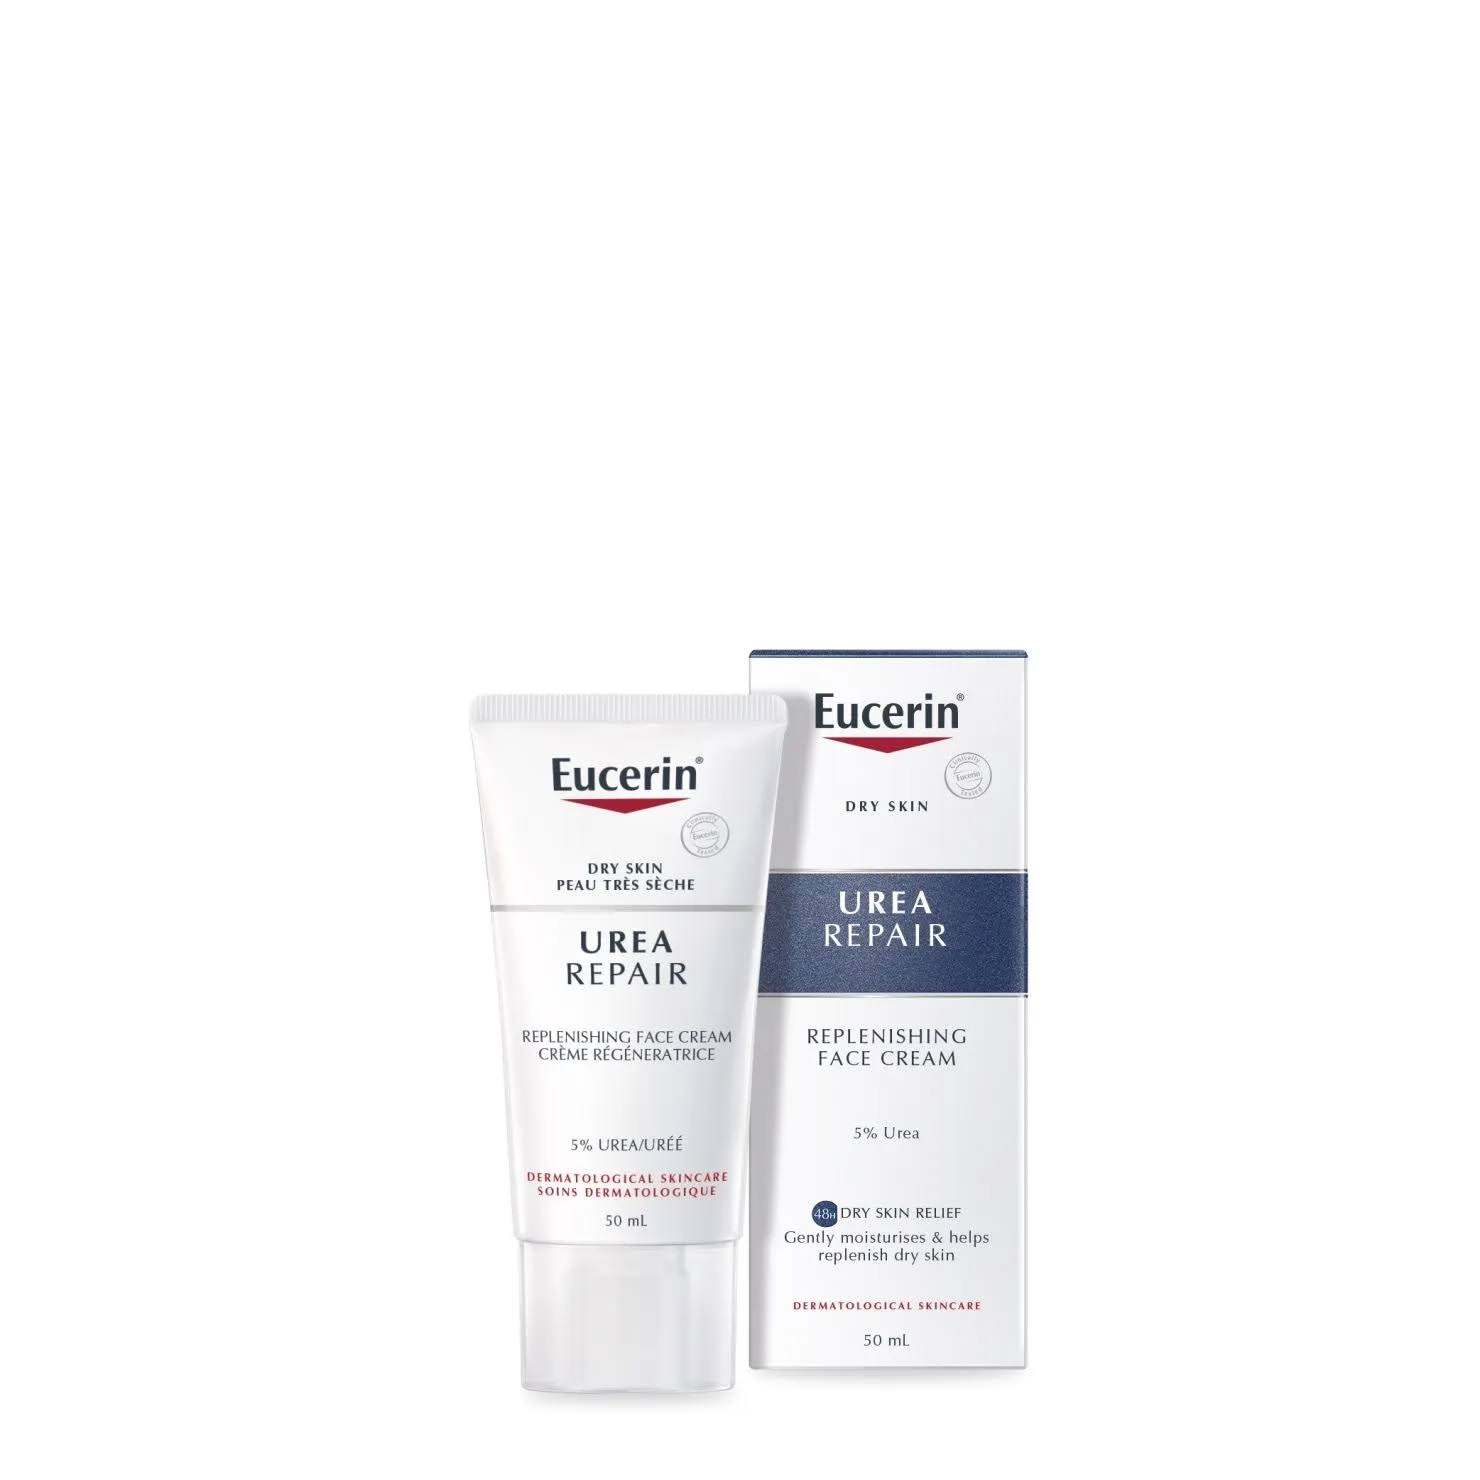 Eucerin Dry Skin Replenishing Face Cream - 5 Percent Urea with Lactate, 50ml